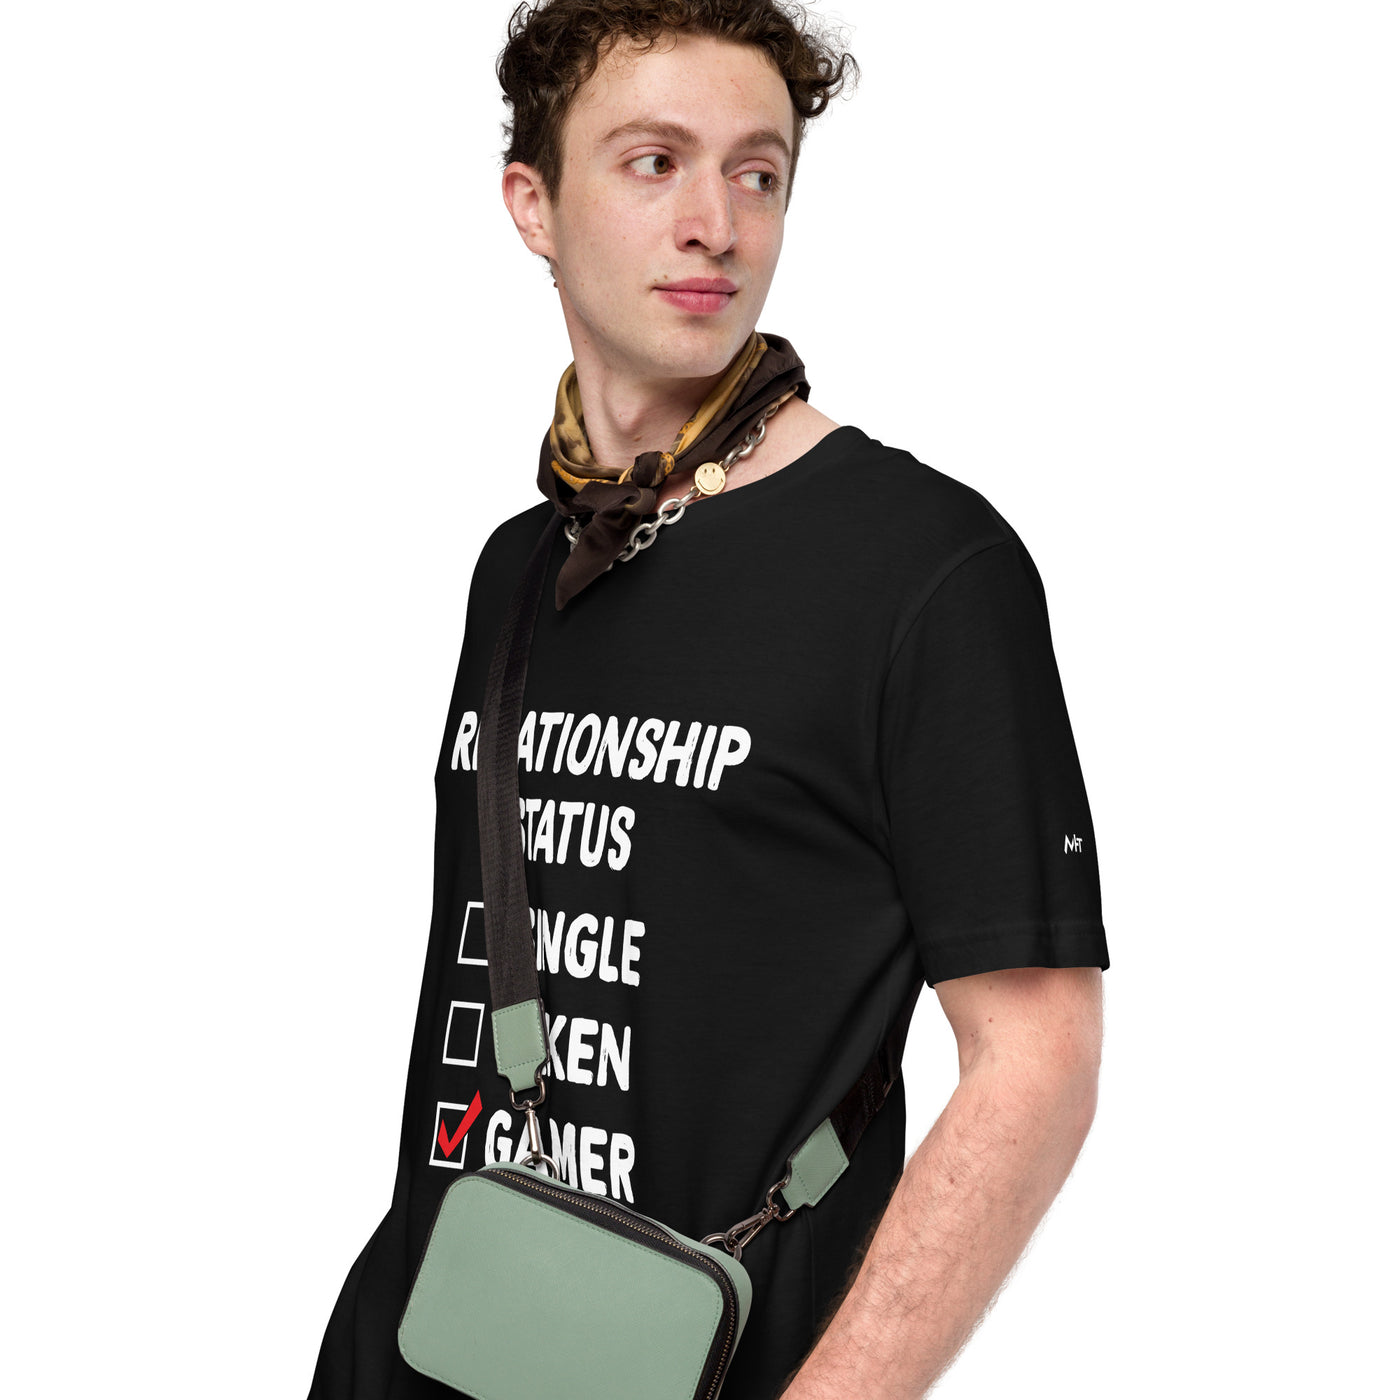 Relationship Status : Gamer - Unisex t-shirt